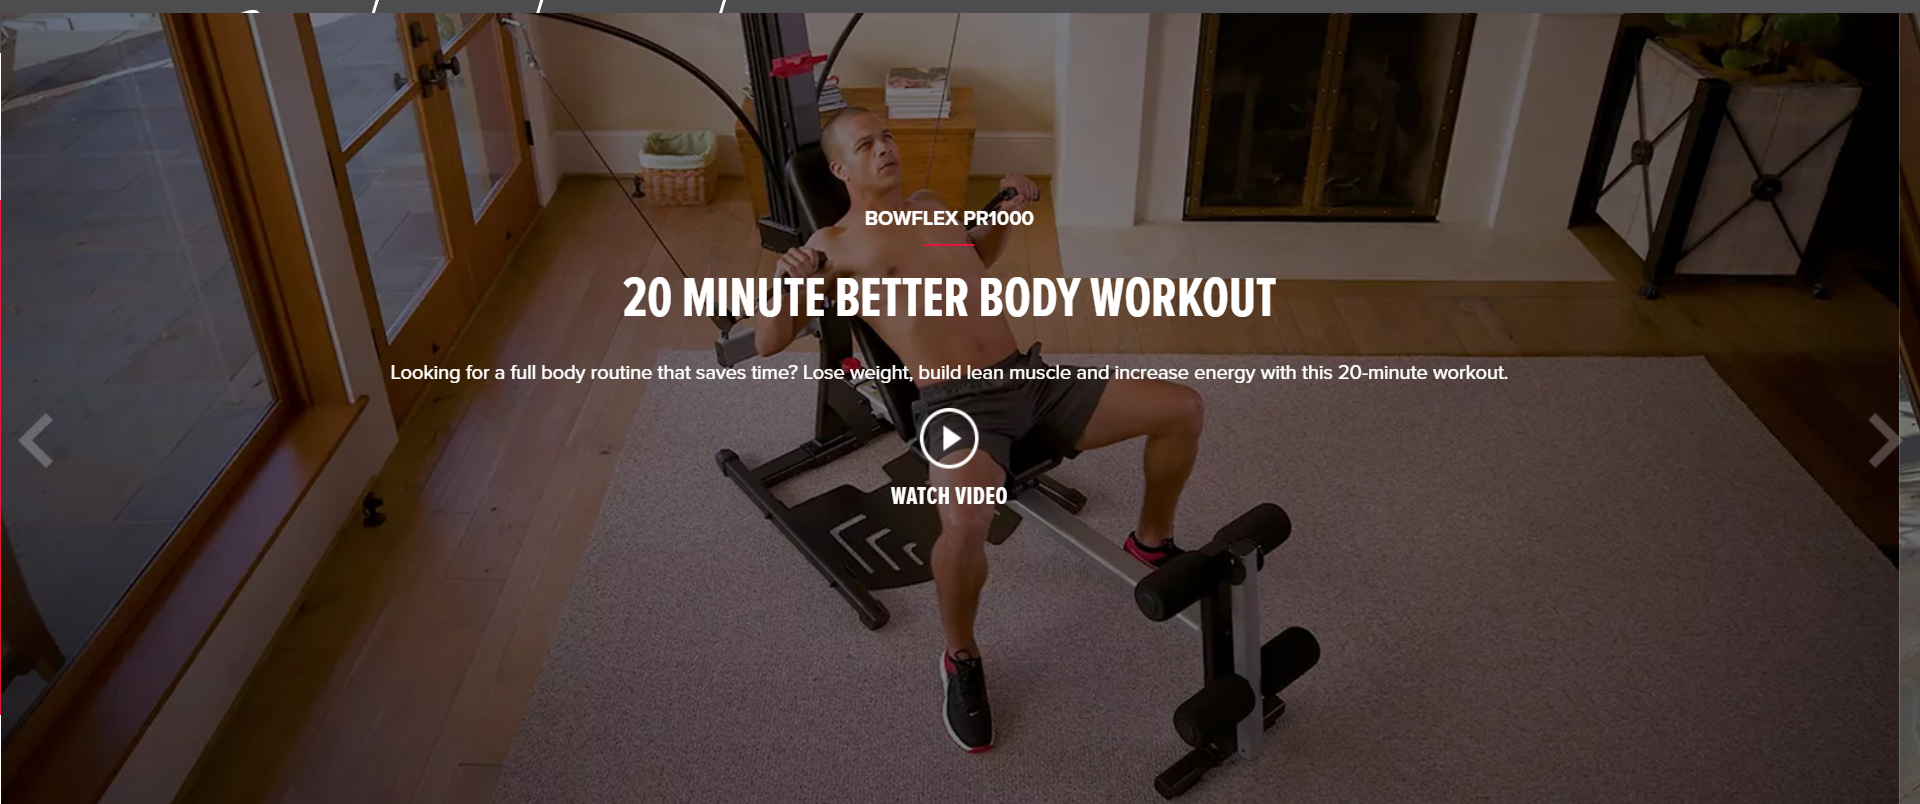 Bowflex 20 minute better body workout YouTube Video